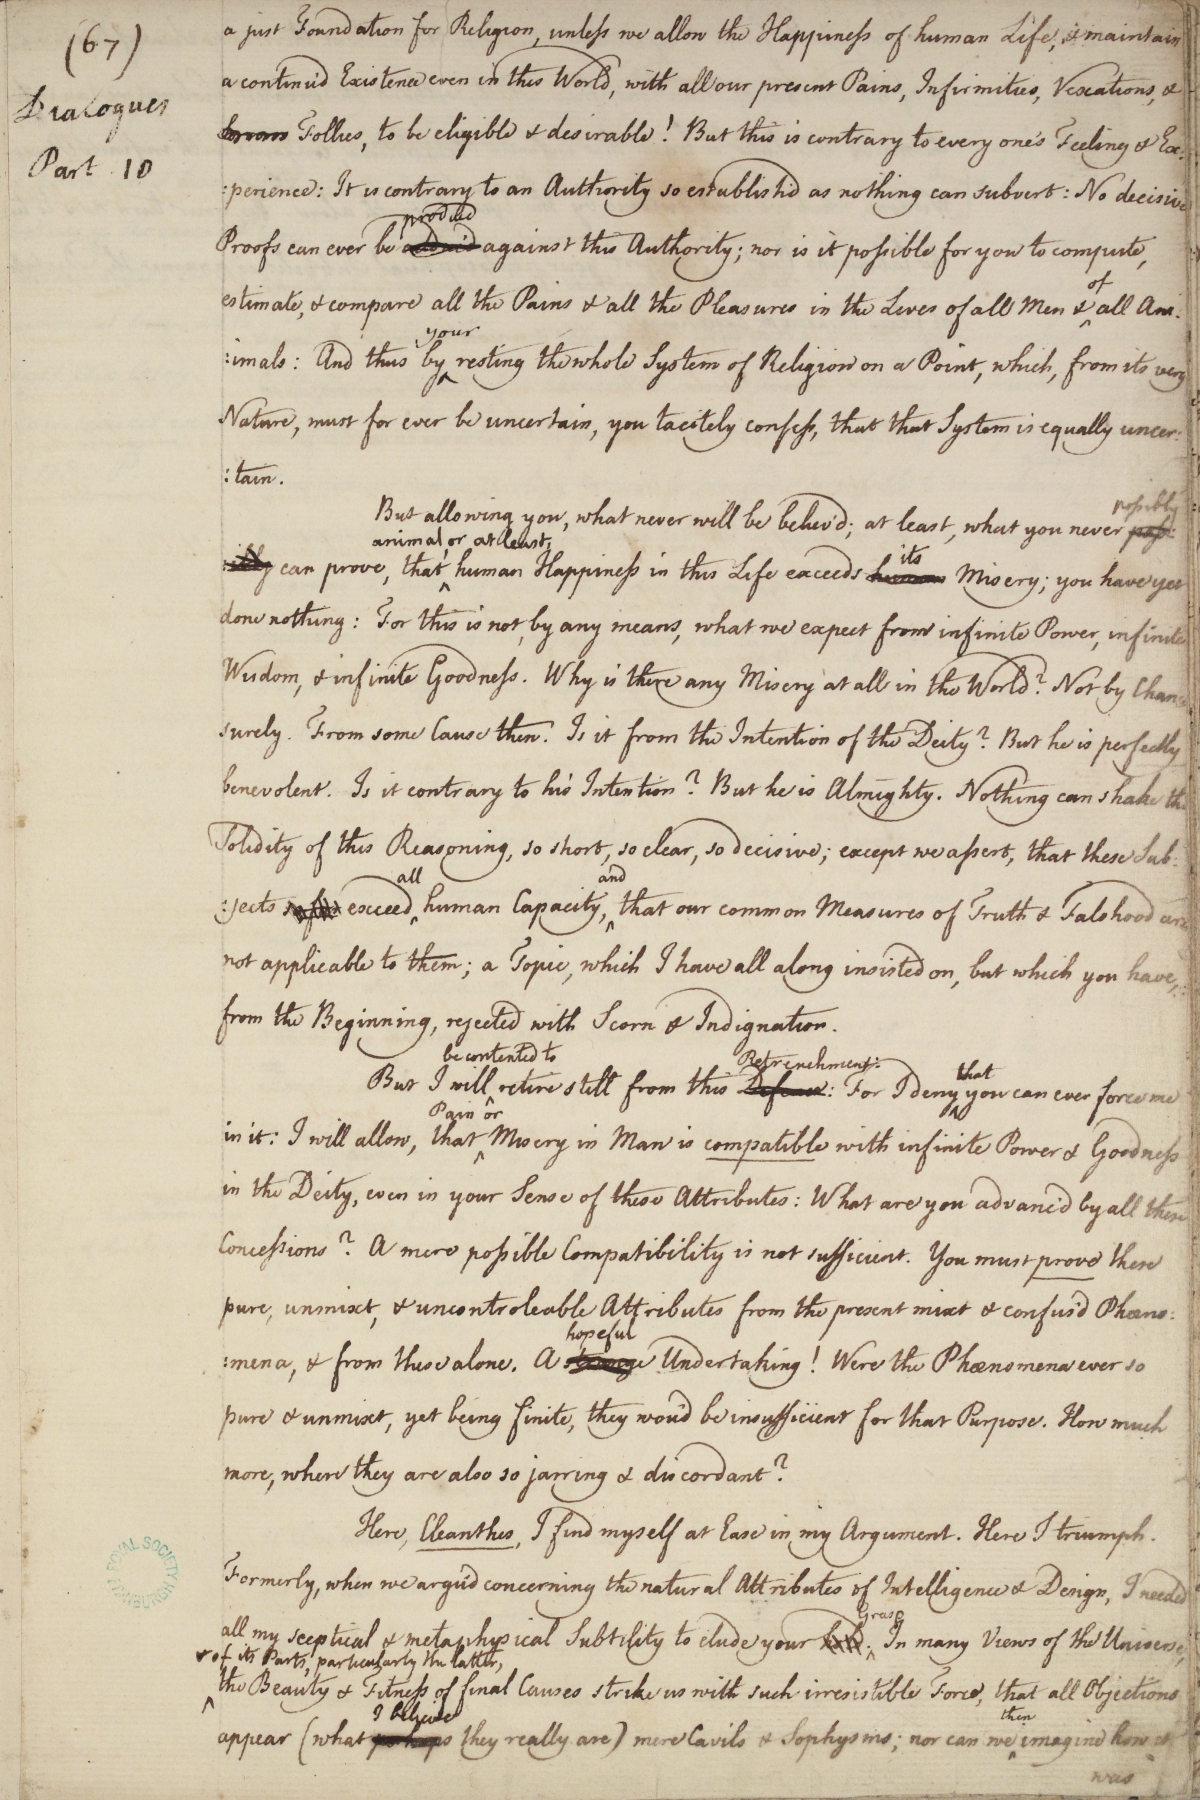 image of manuscript page 67